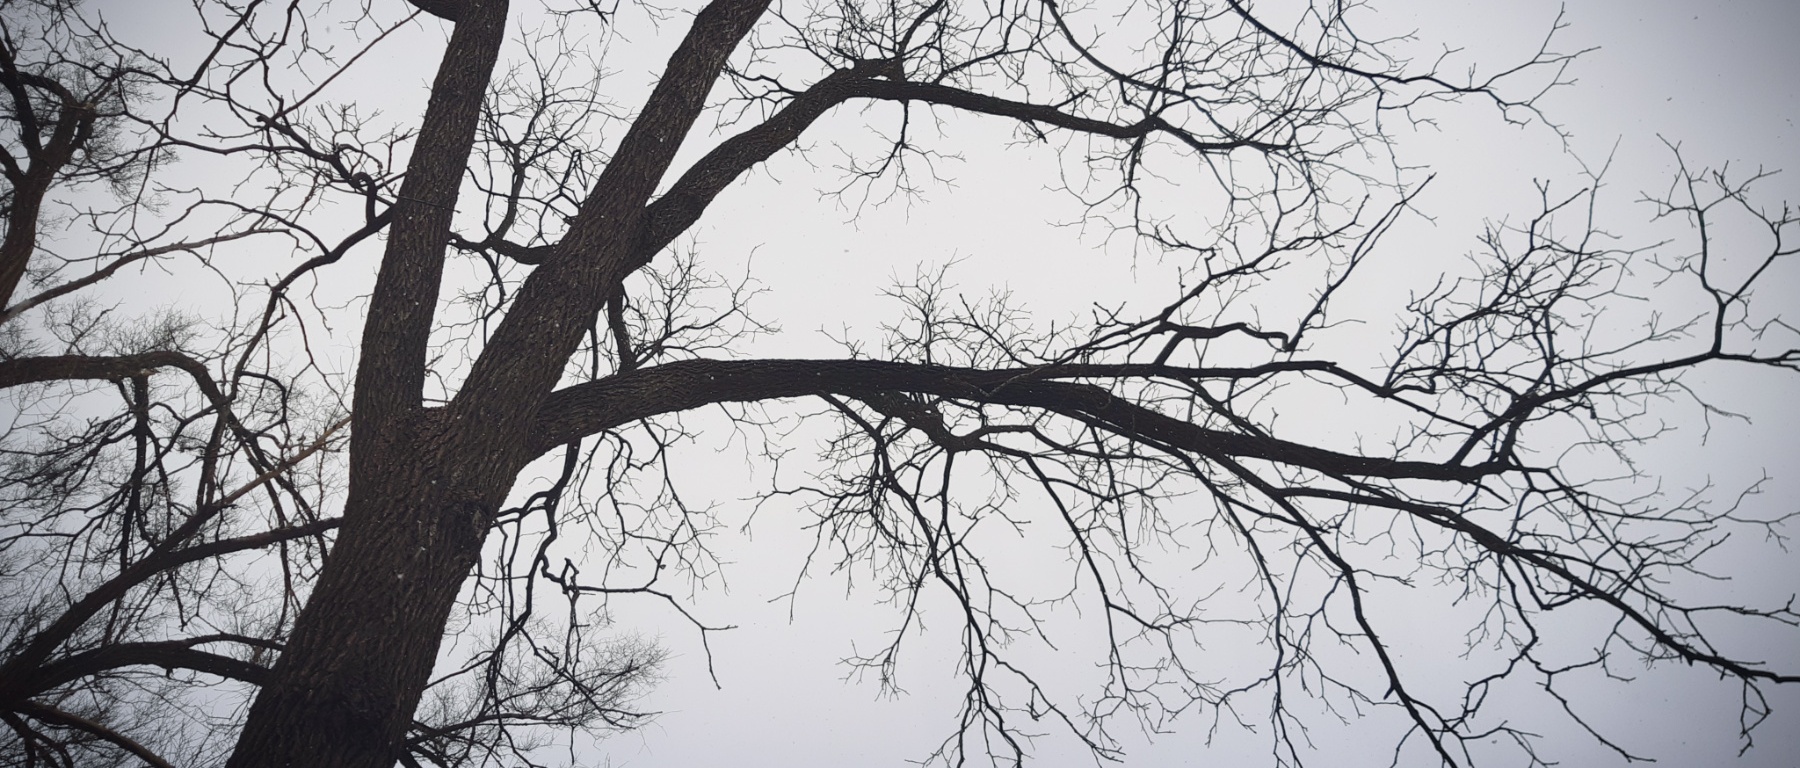 Black Walnut Tree On A Gray Day - thetemenosjournal.com